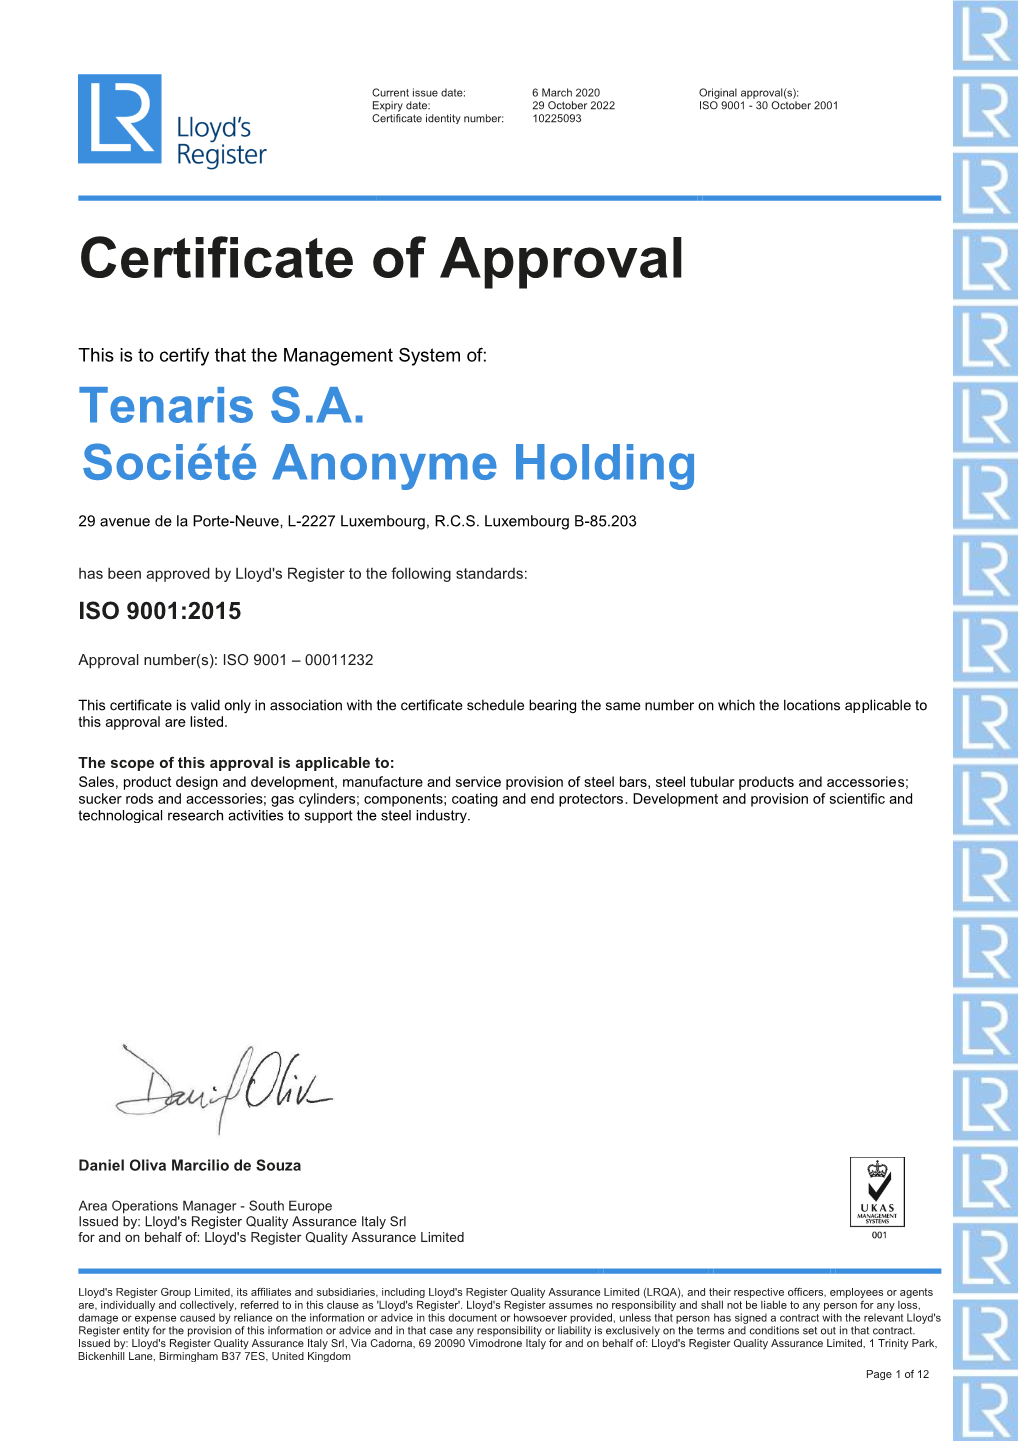 ISO 9001 Tenaris Global Lloyds Register Quality Assurance Quality System